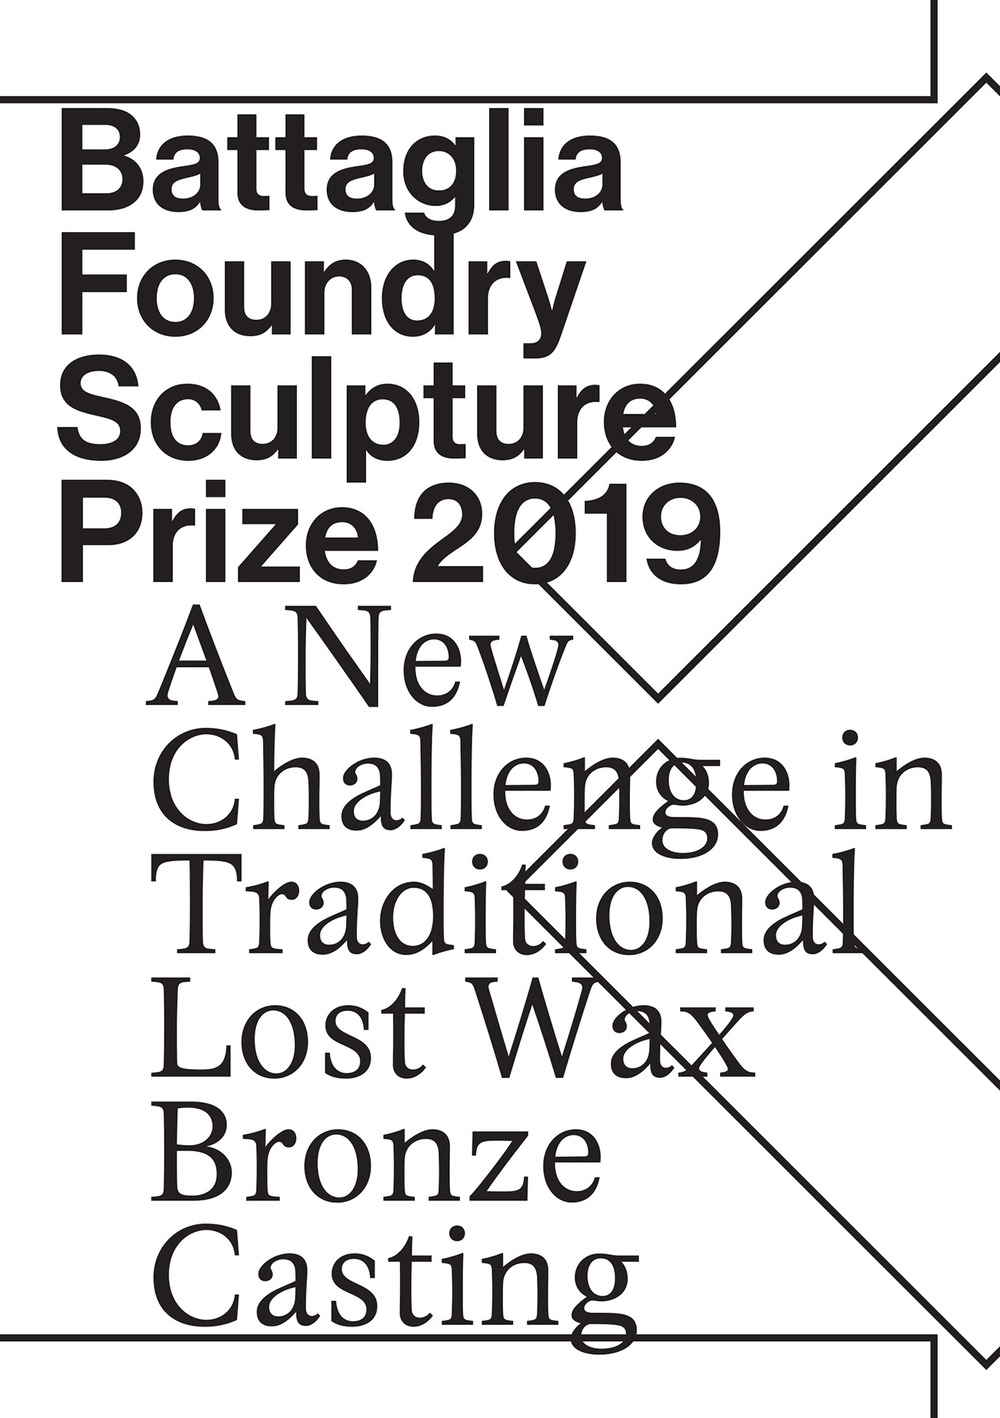 Battaglia foundry sculpture prize 2019. A new challenge in traditional lost wax bronze casting